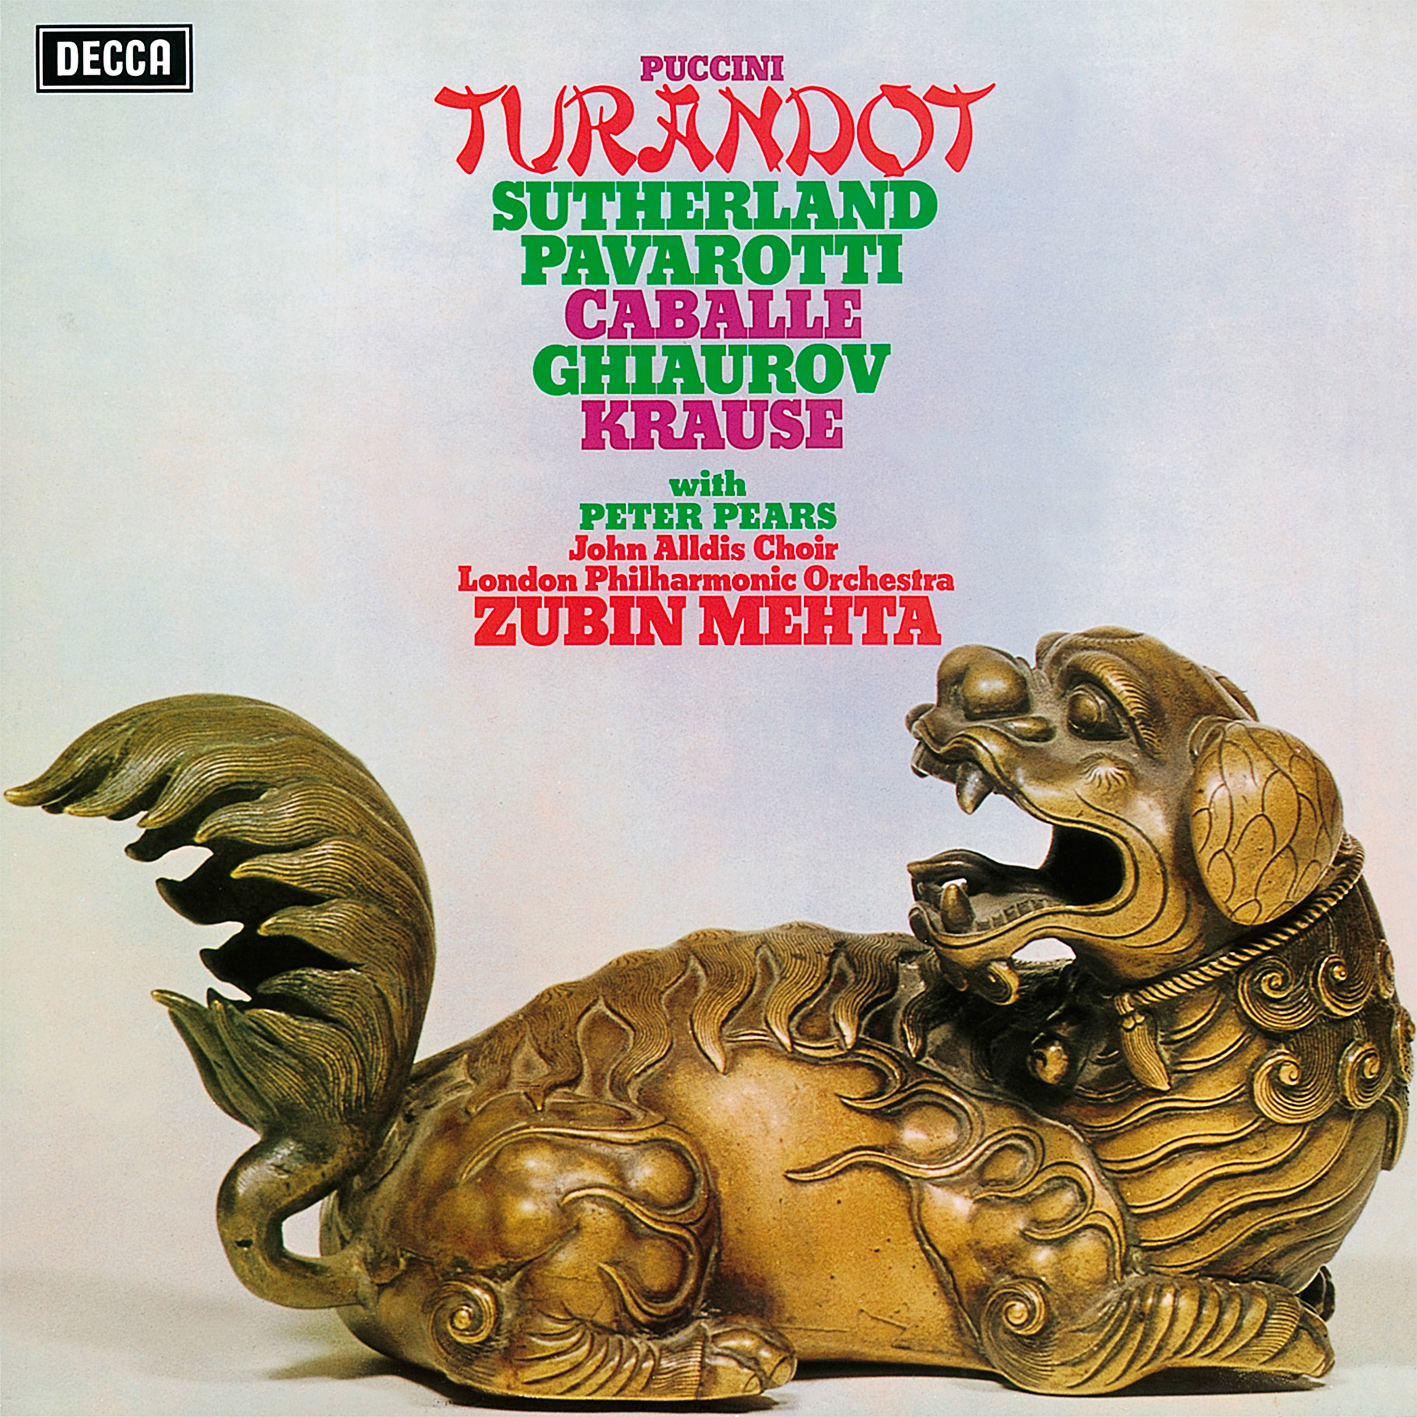 Sutherland, Pavarotti, Caballe, LPO, Zubin Mehta - Puccini. Turandot (1972/2014) [HDTracks FLAC 24bit/96kHz]